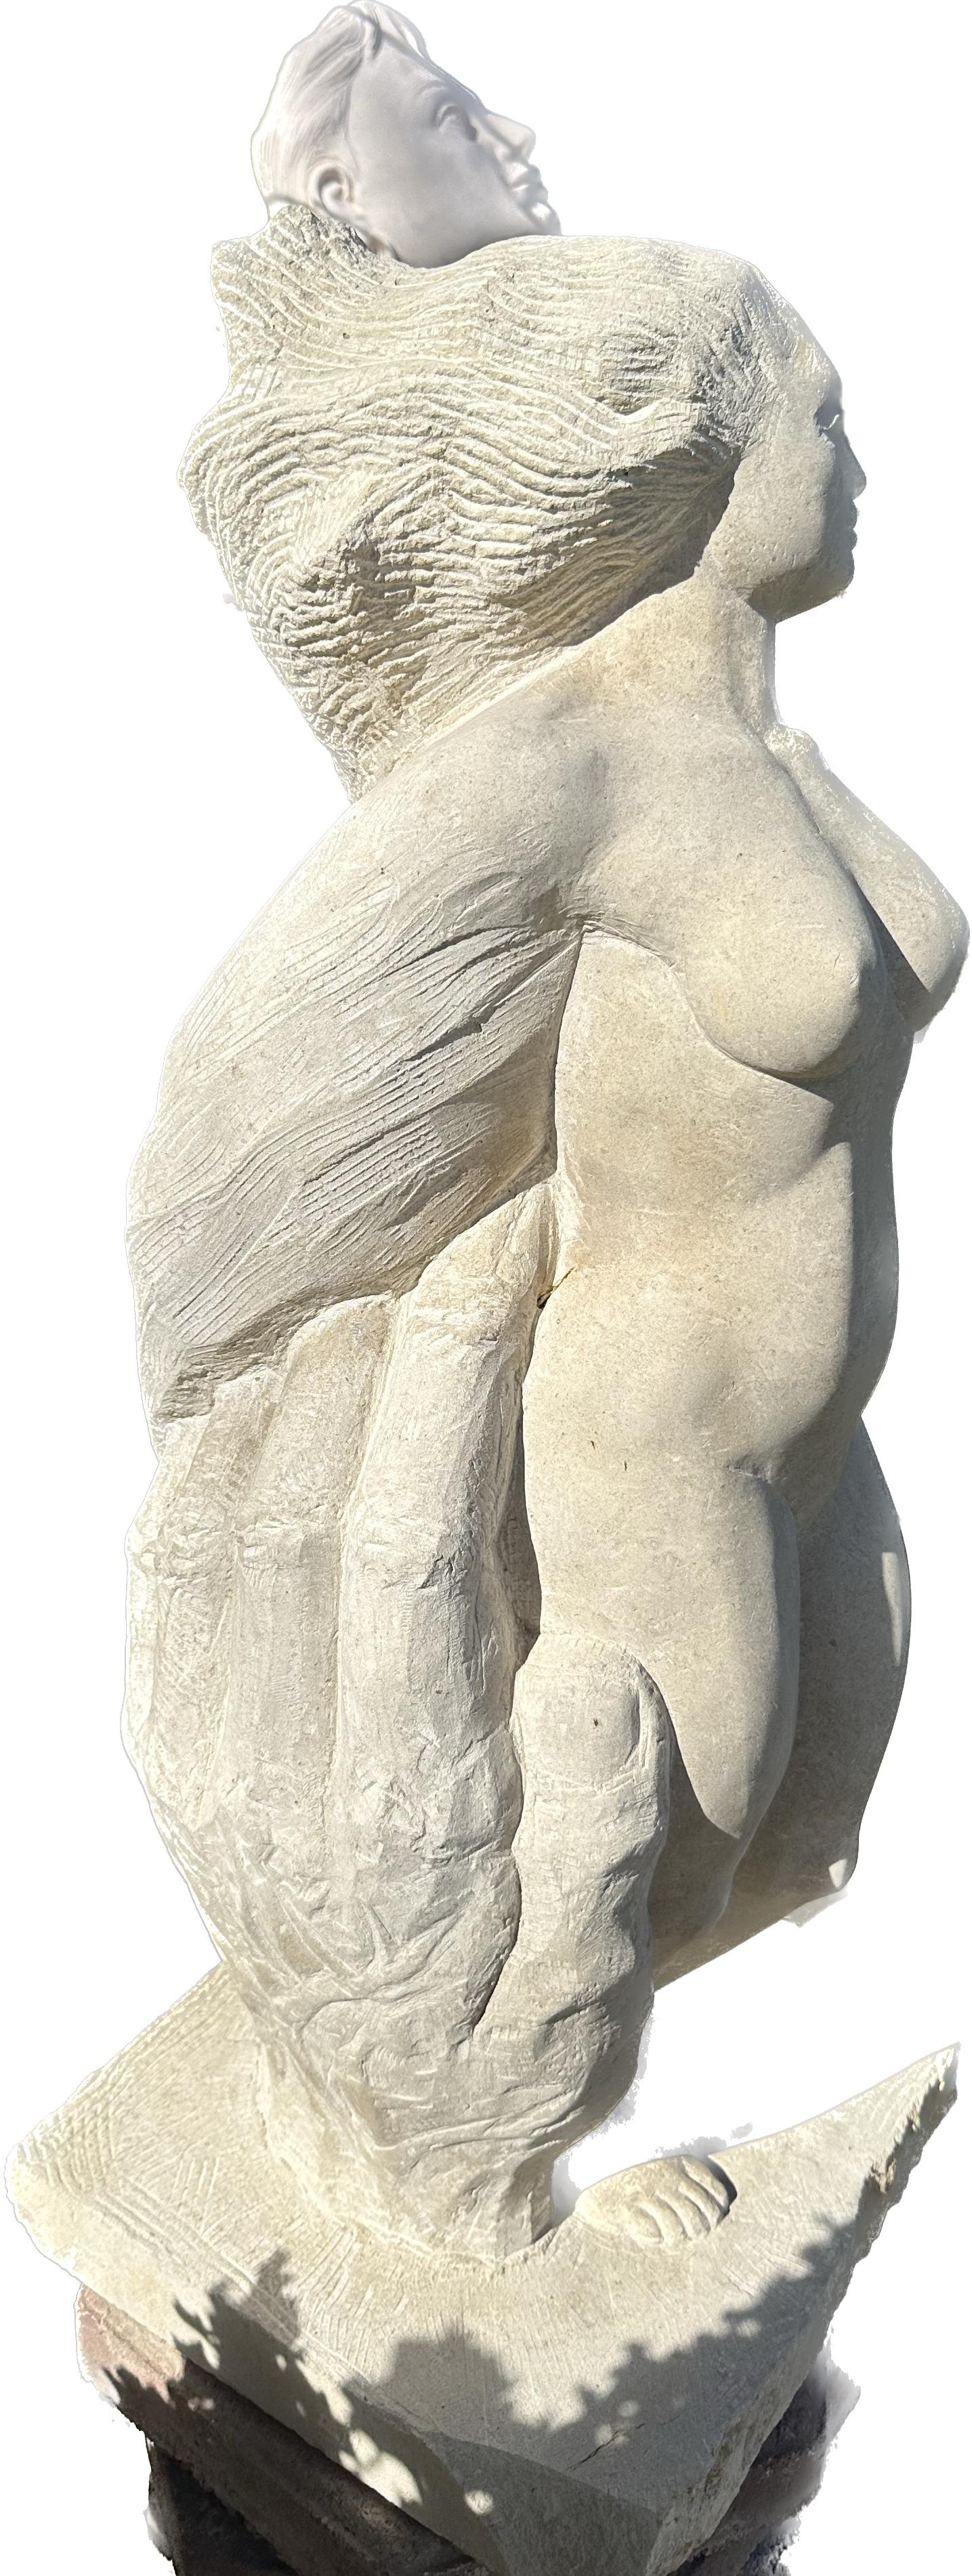 Artist:  (Garo) Karapet Balakeseryan  
Medium: Stone, One of a Kind 
Year: 2023
Style: Classic, Impressionism, 
Subject: Nude Woman
Size: 30